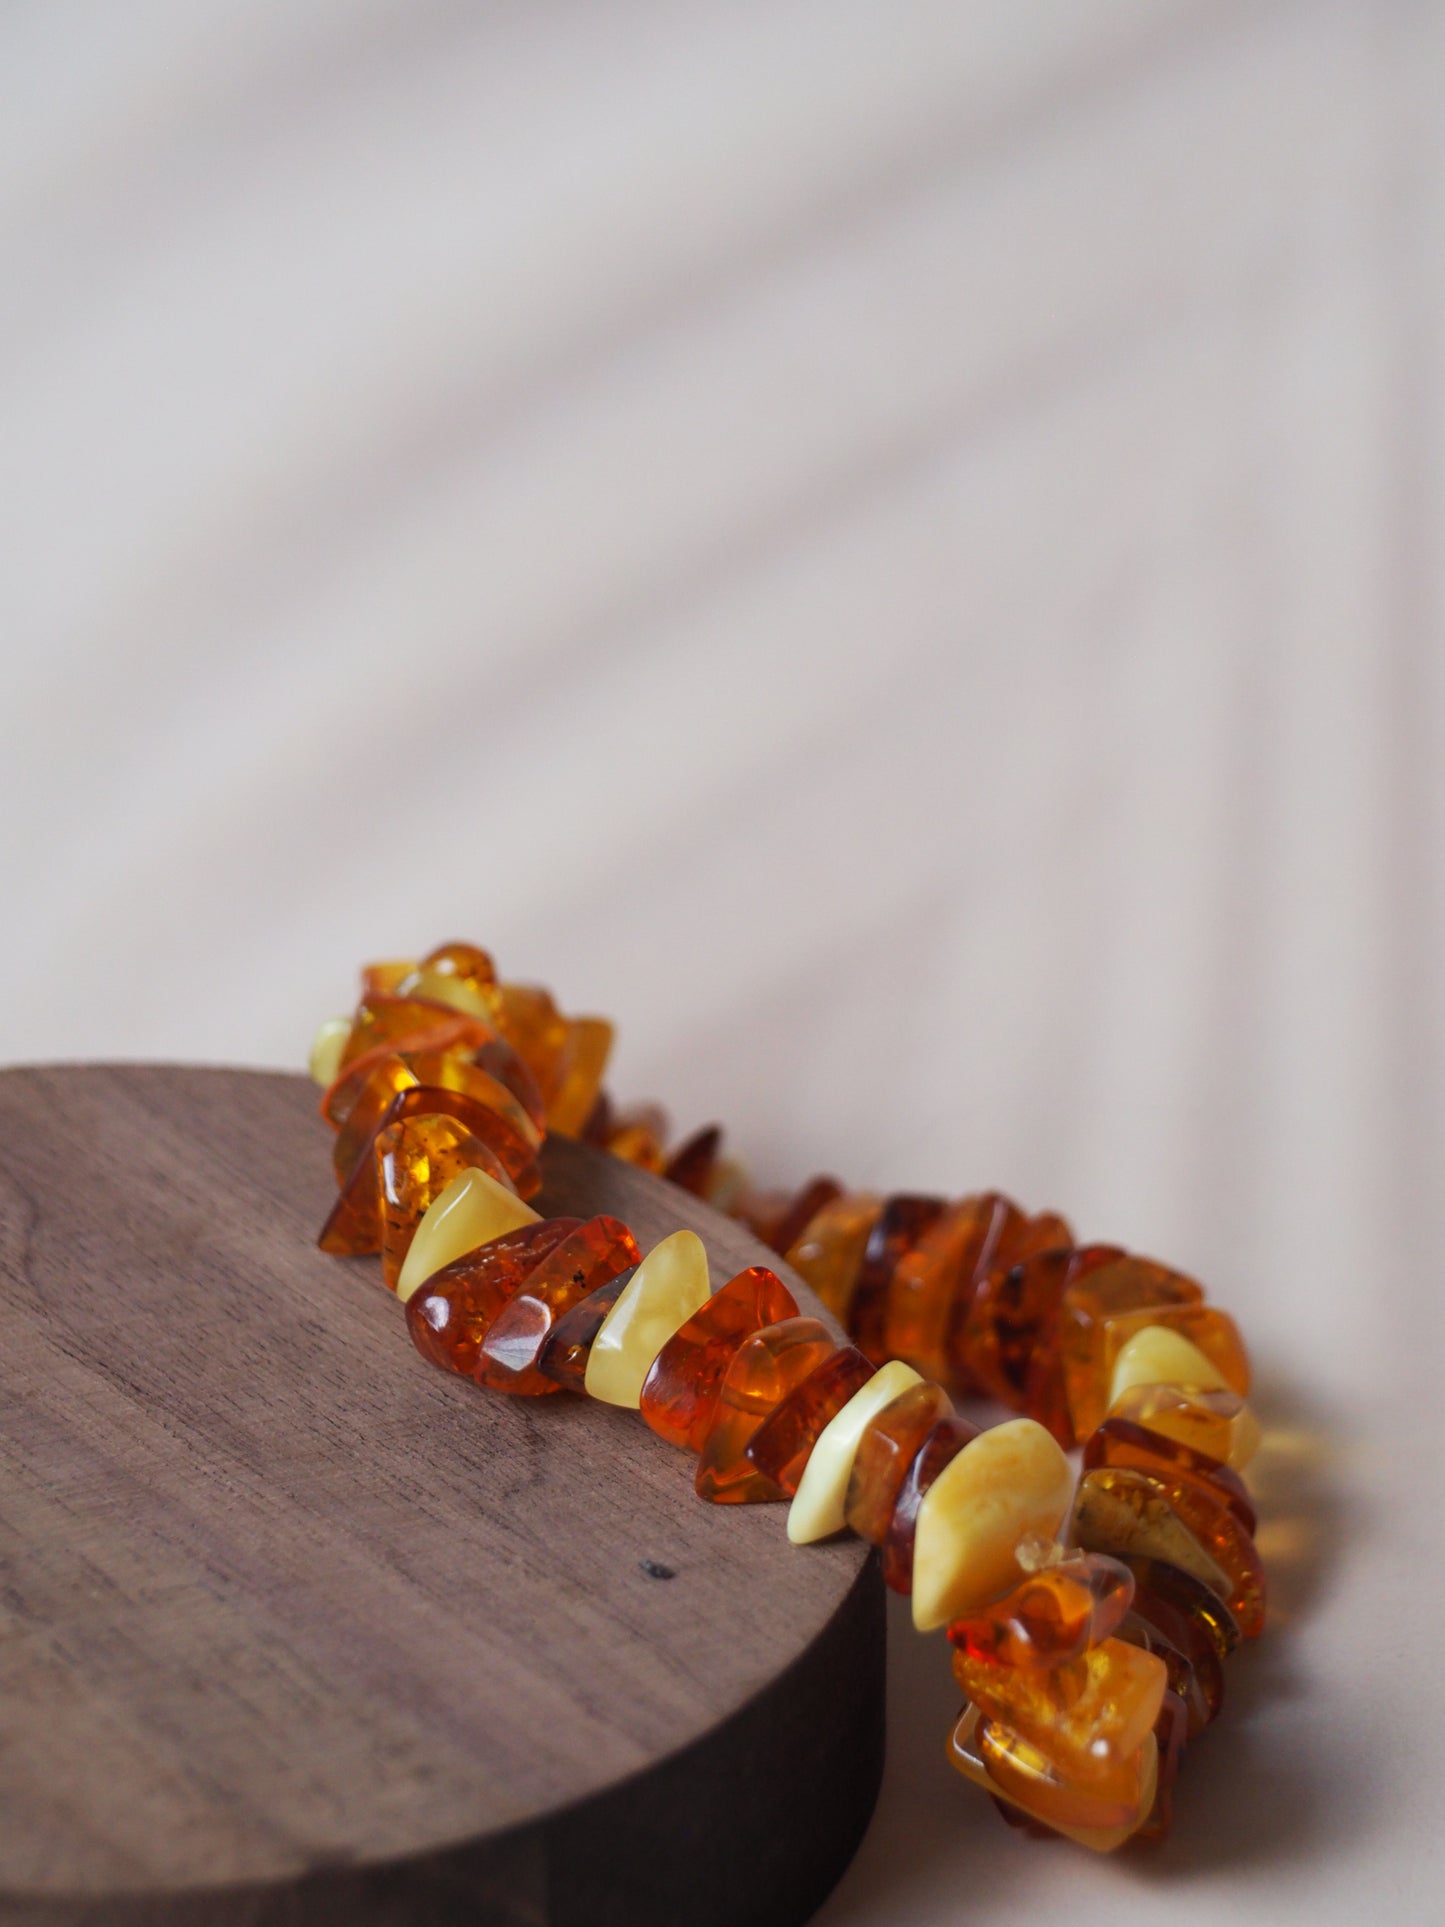 Cognac Amber/ Butterscotch Amber Raw Polished Bracelet with Irregular Beads